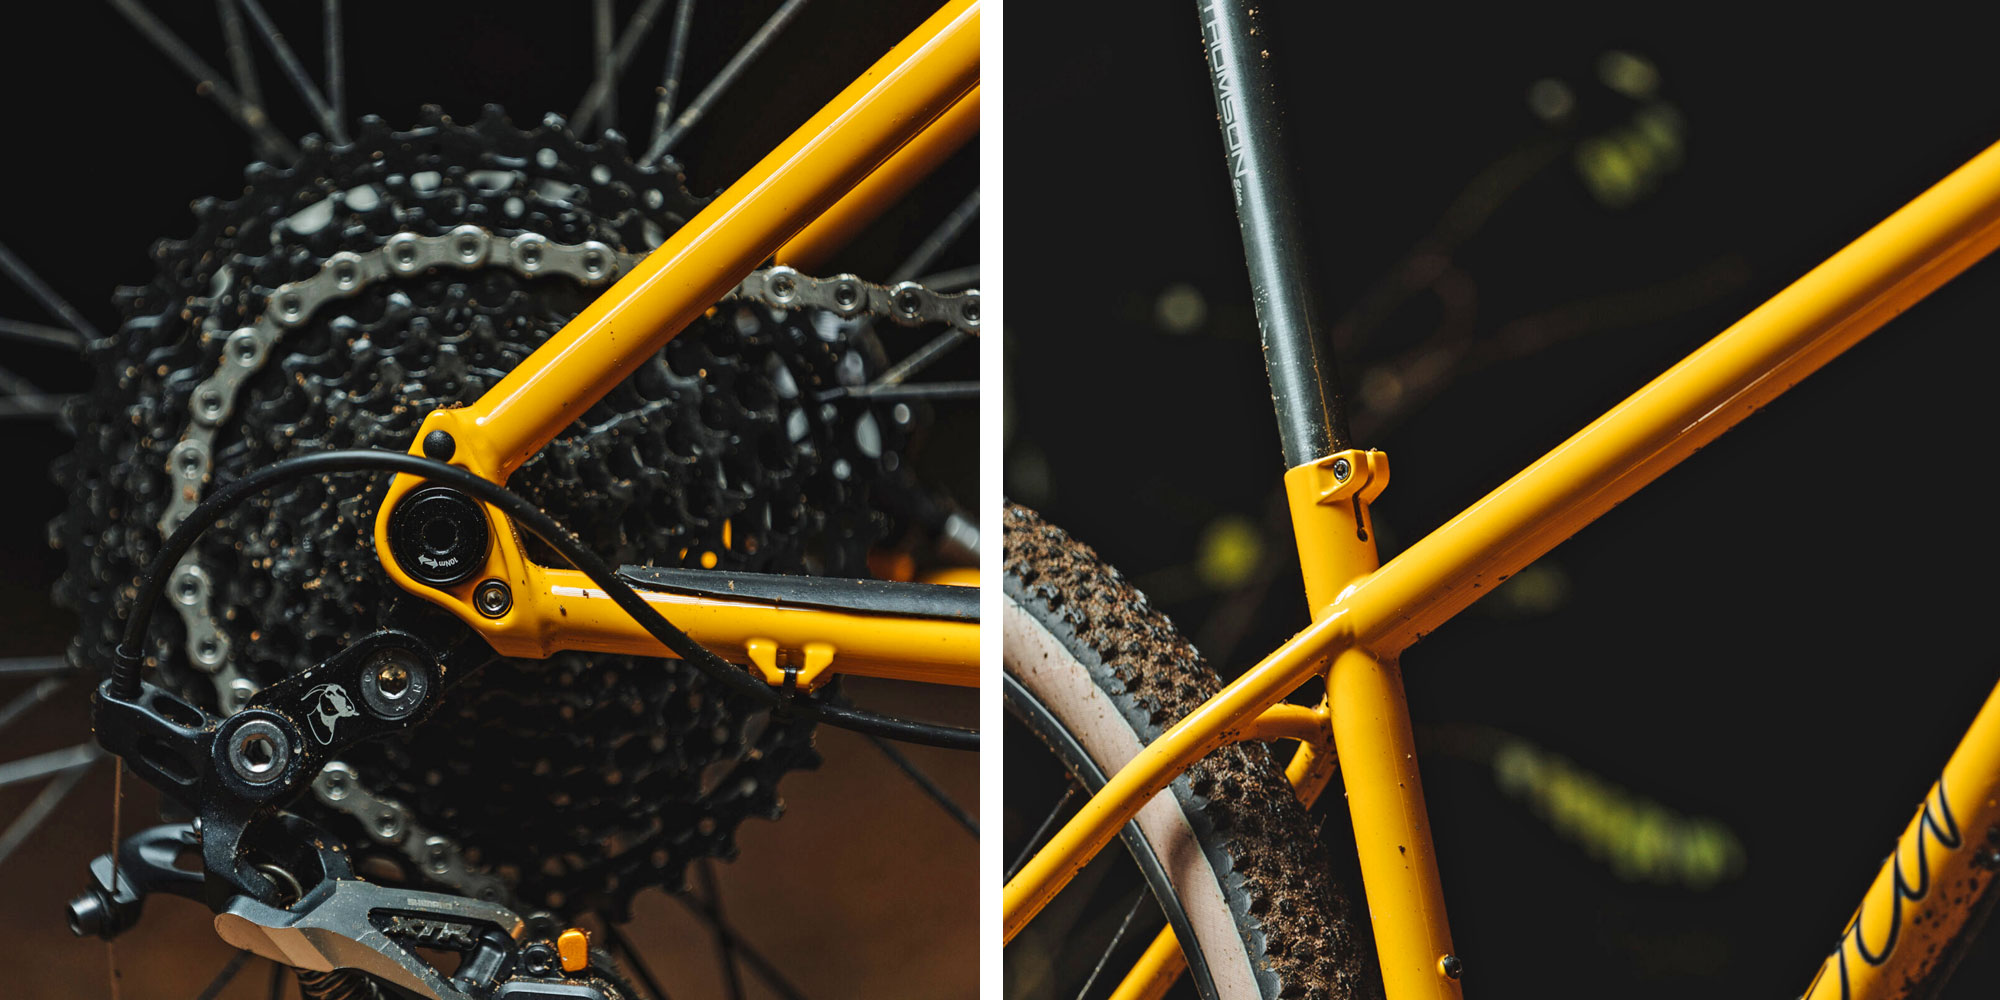 Sour Pasta Party steel XC hardtail mountain bike, frame details